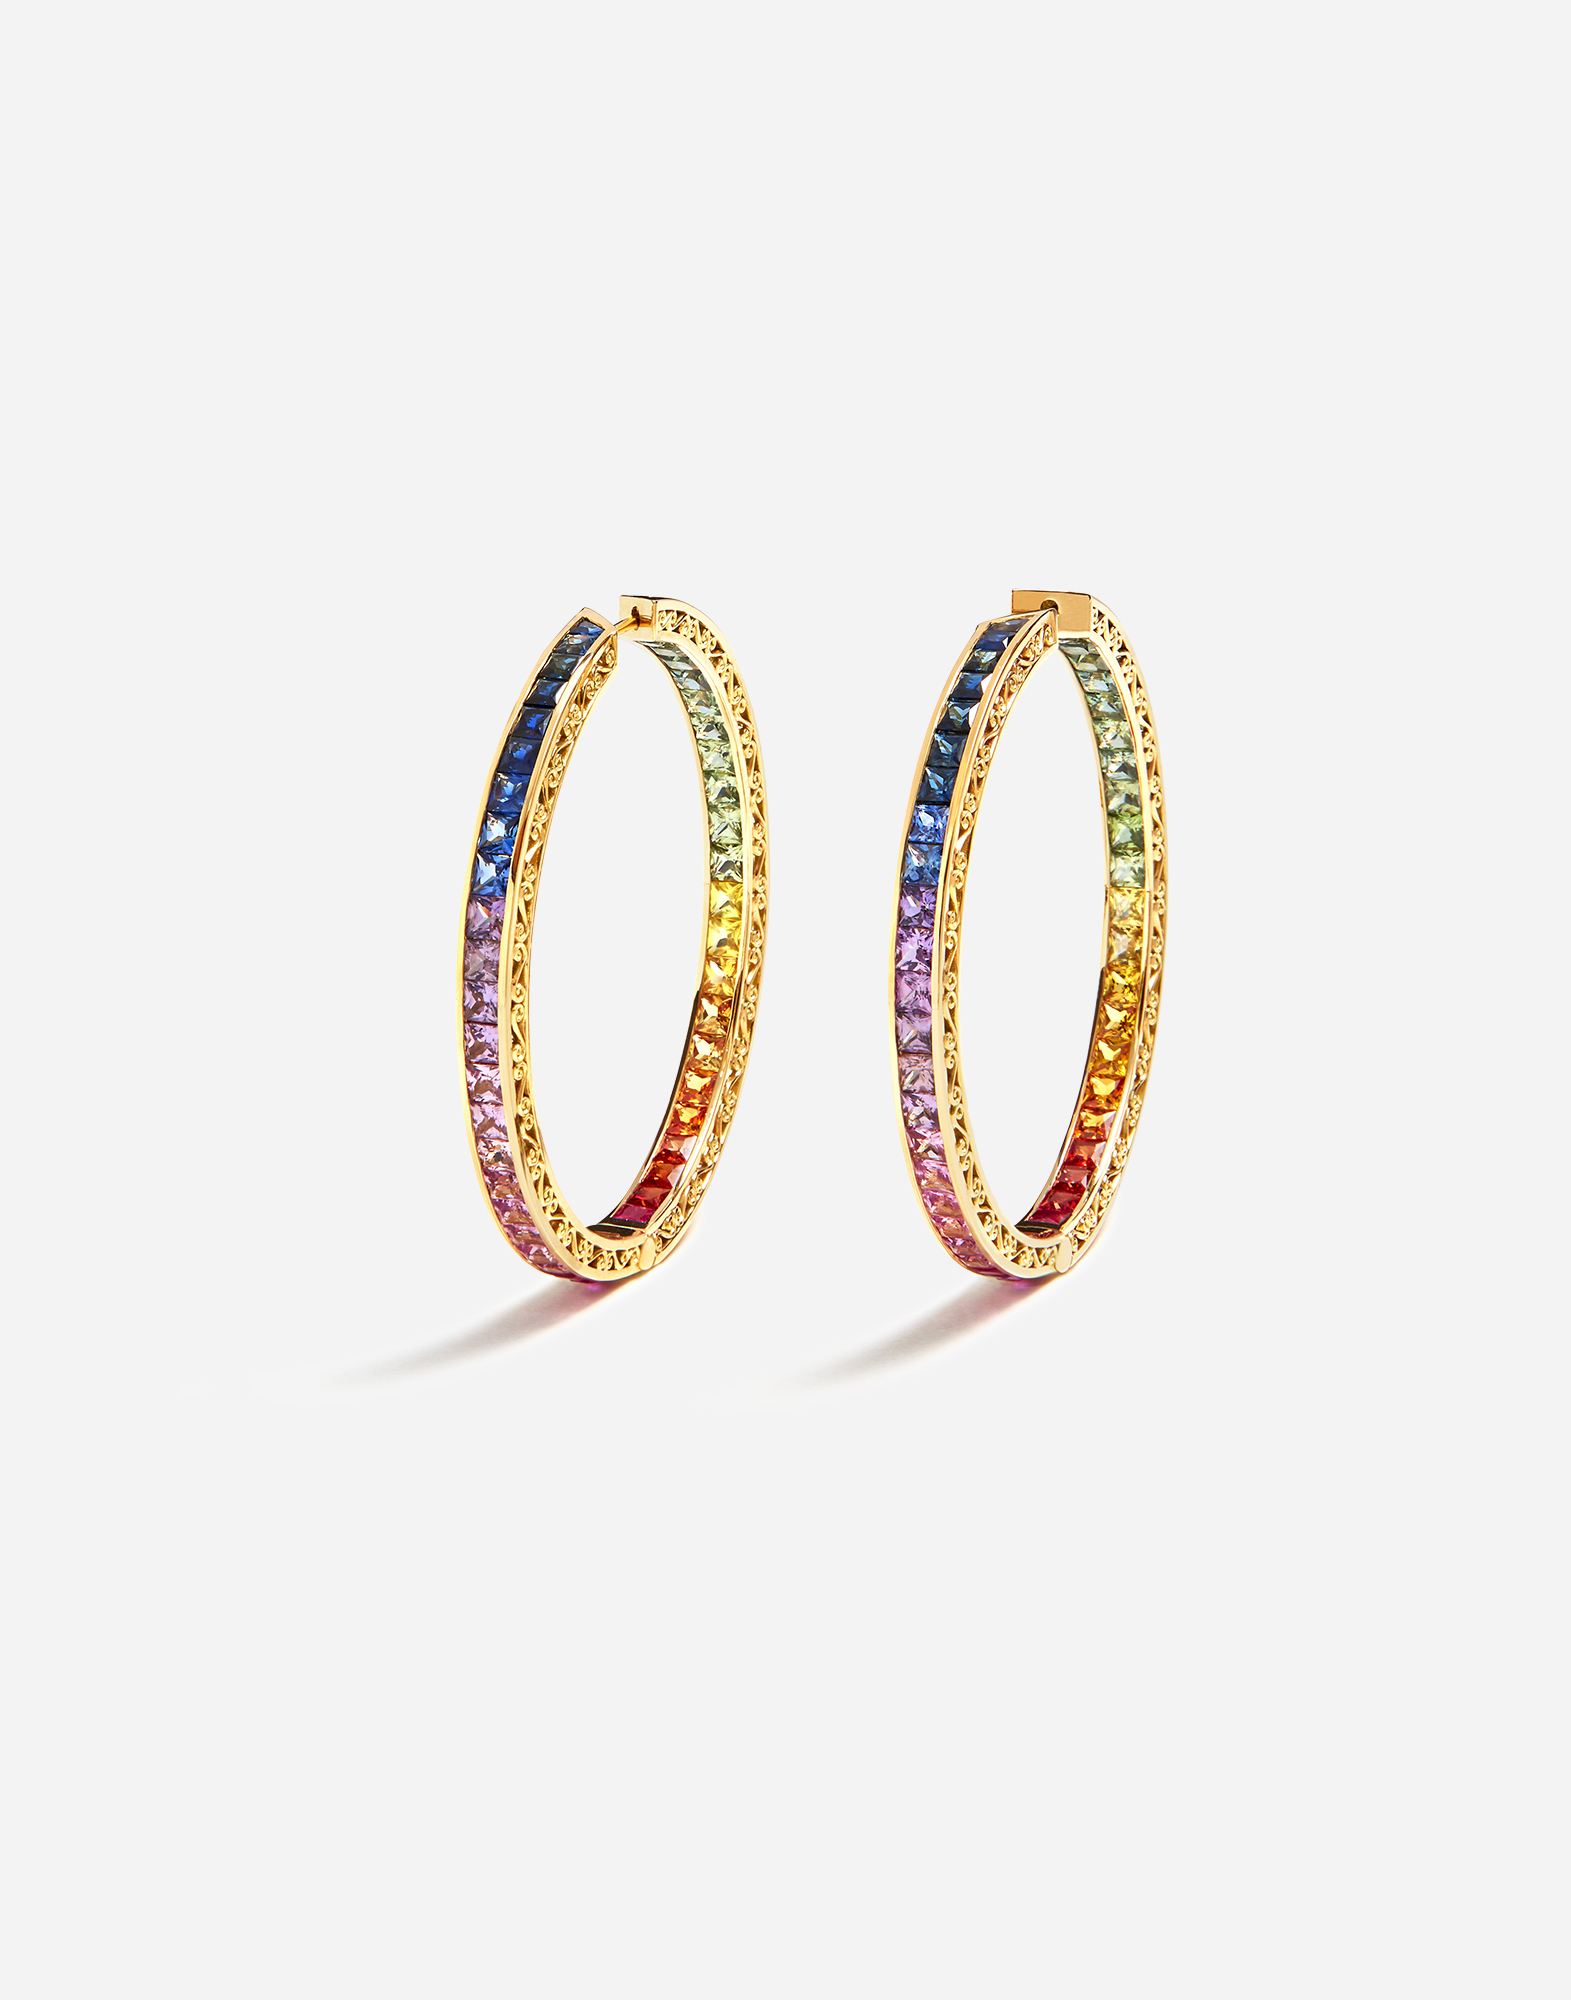 Multi-colored sapphire hoop earrings in Gold